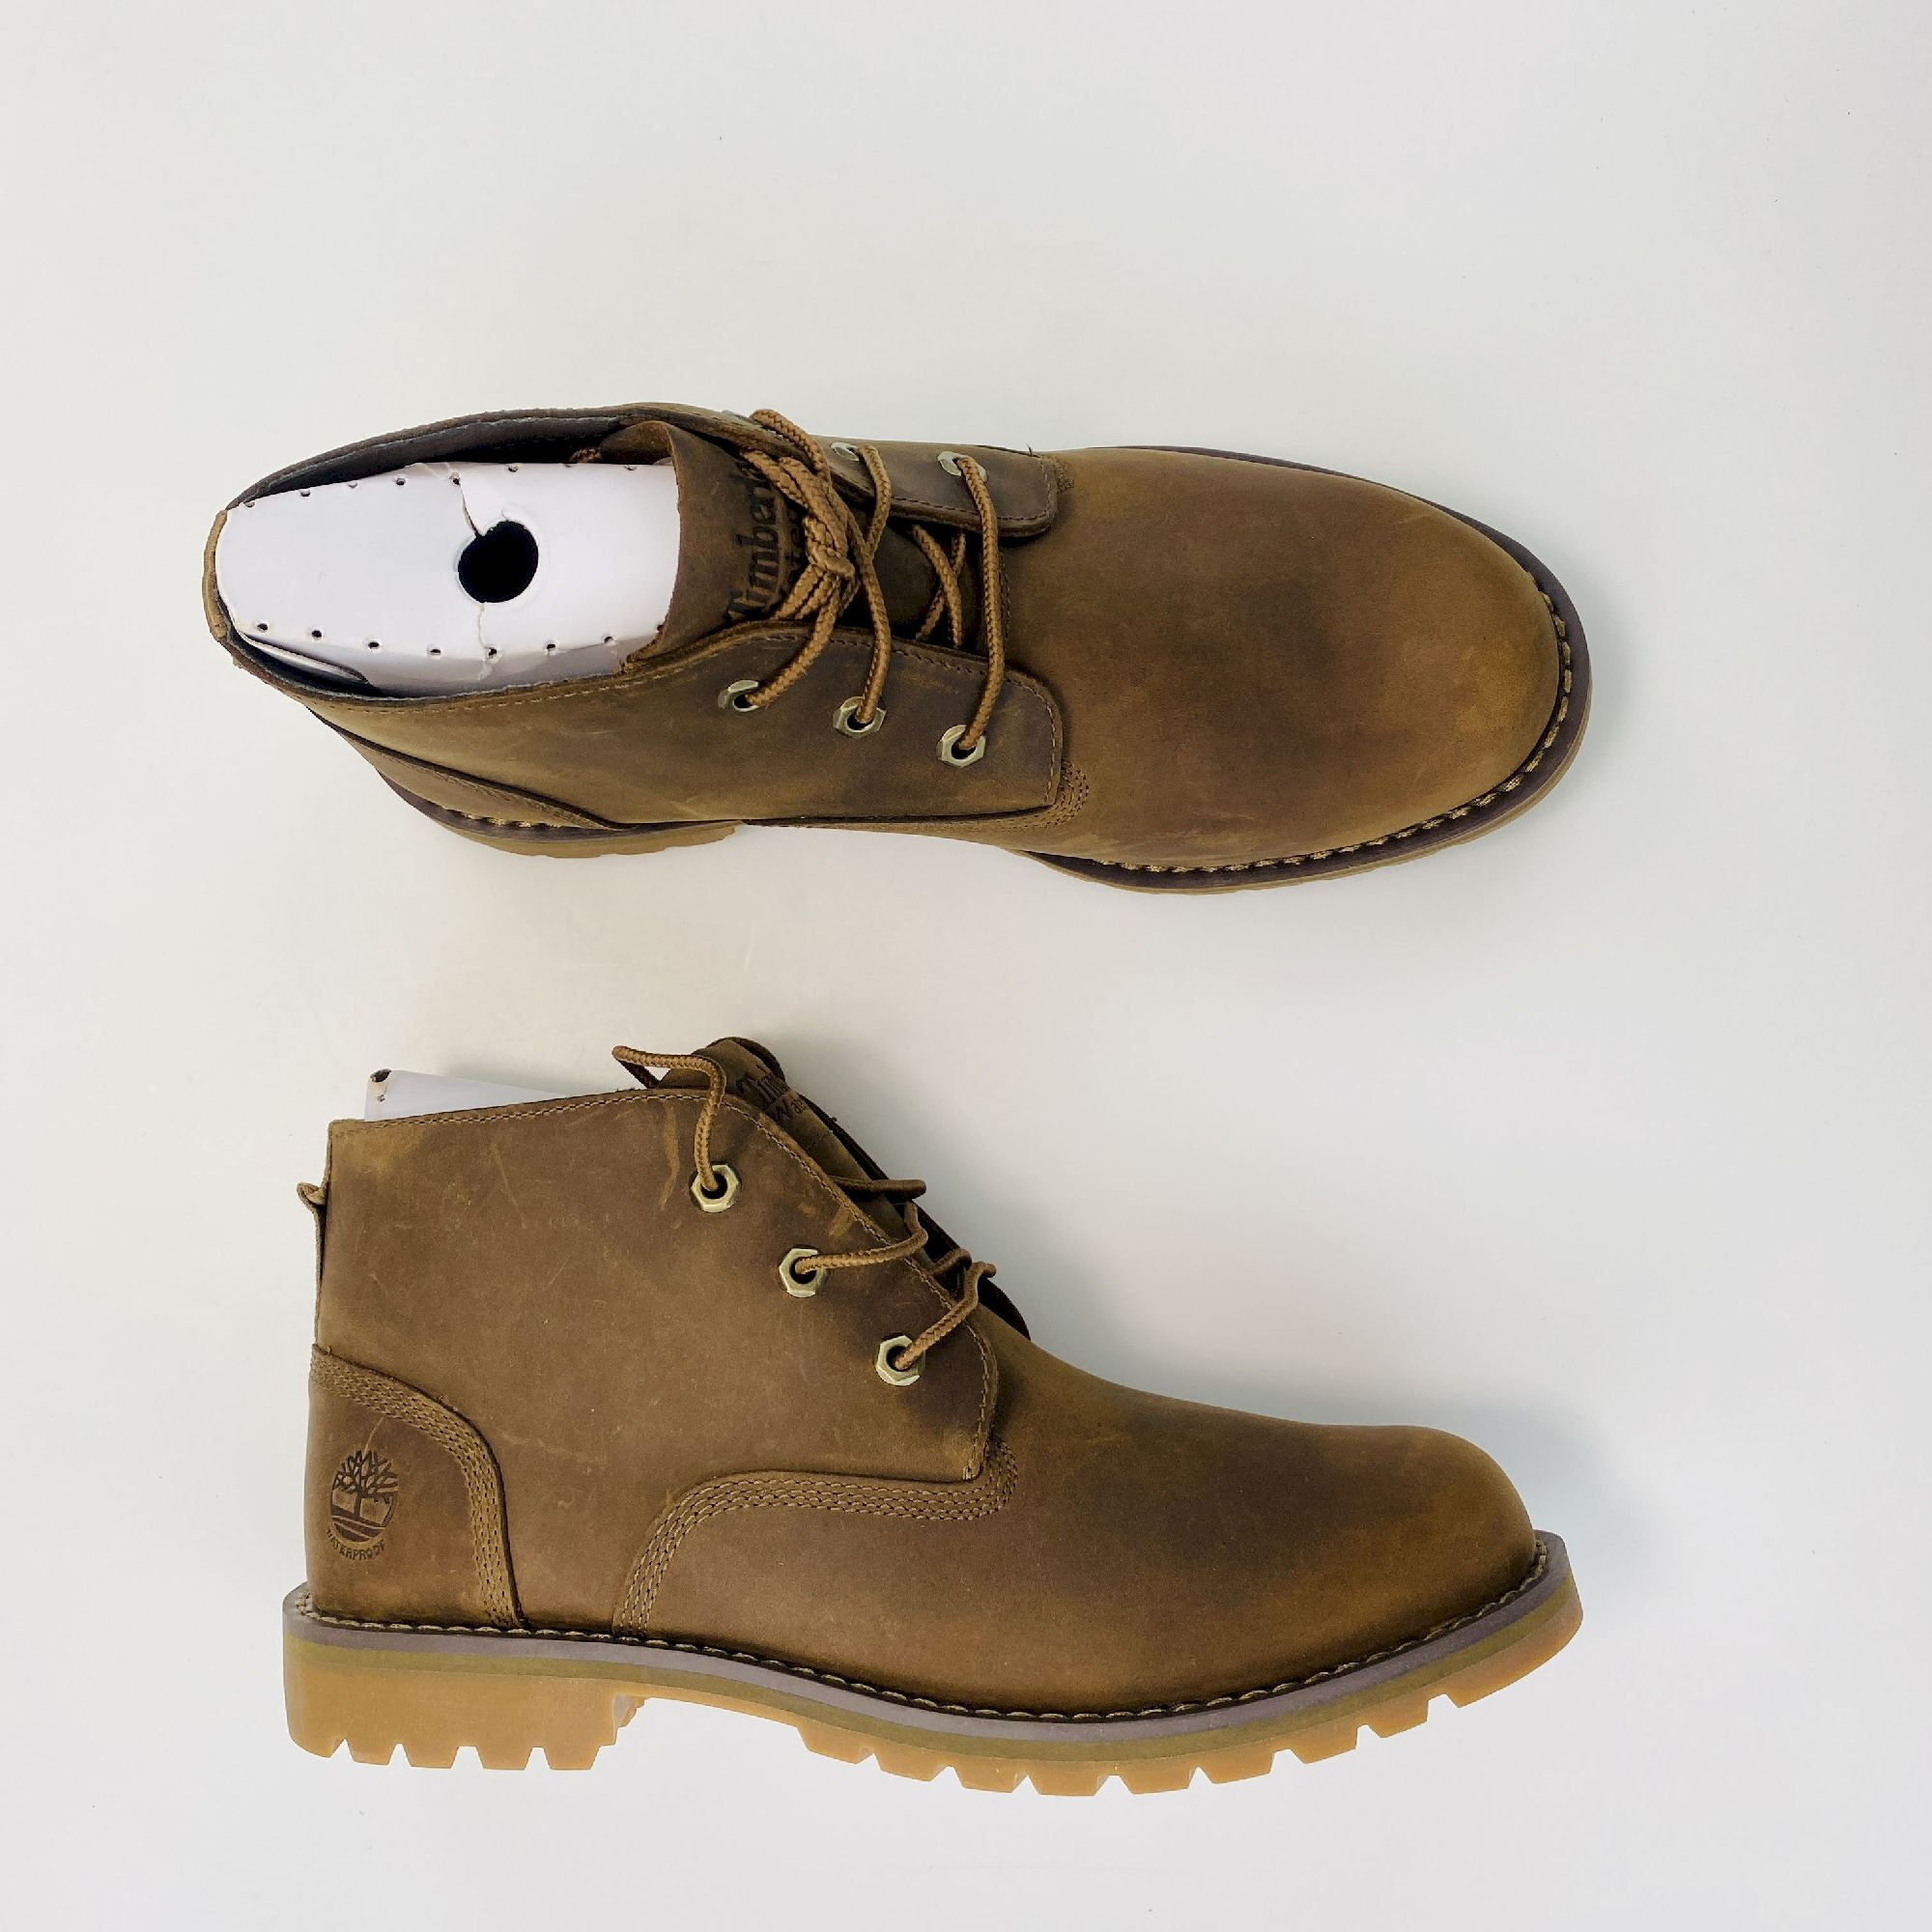 Timberland Larchmont Waterproof Chukka - Seconde main Chaussures homme - Marron - 42 | Hardloop